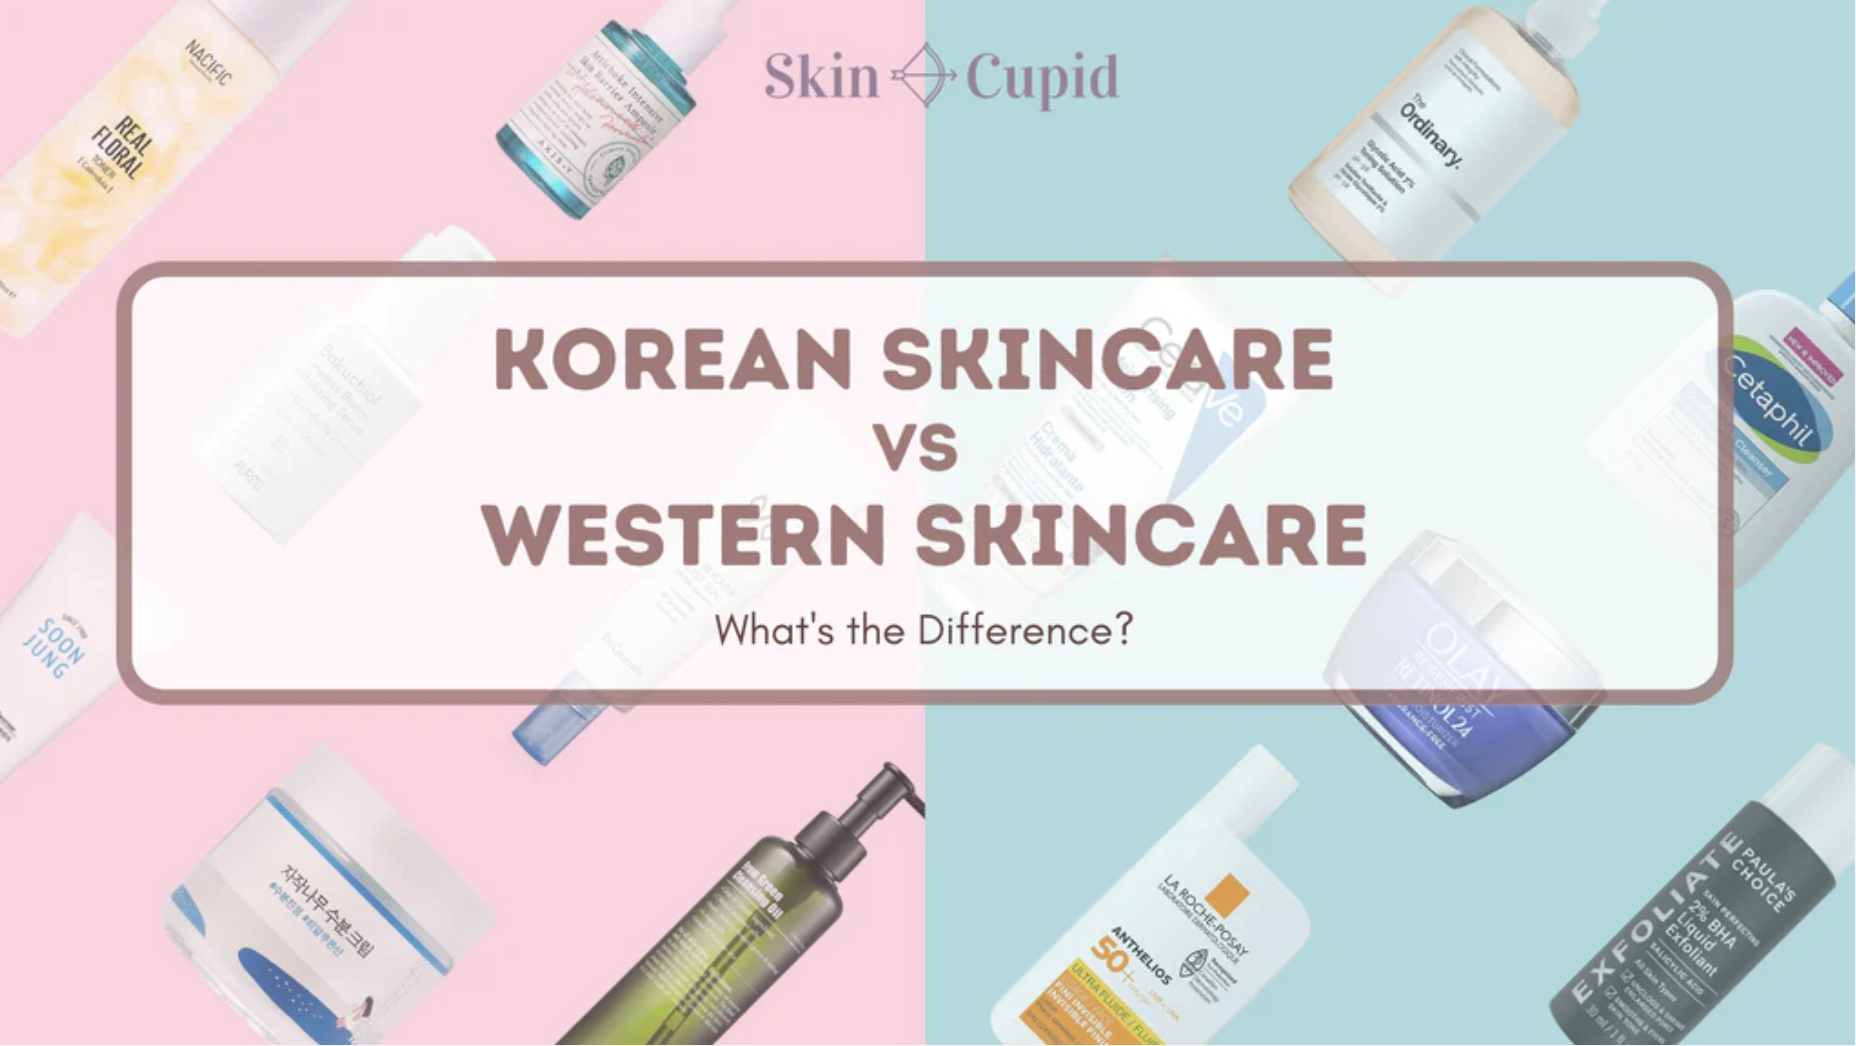 Korean skincare duels Western skincare for top spot